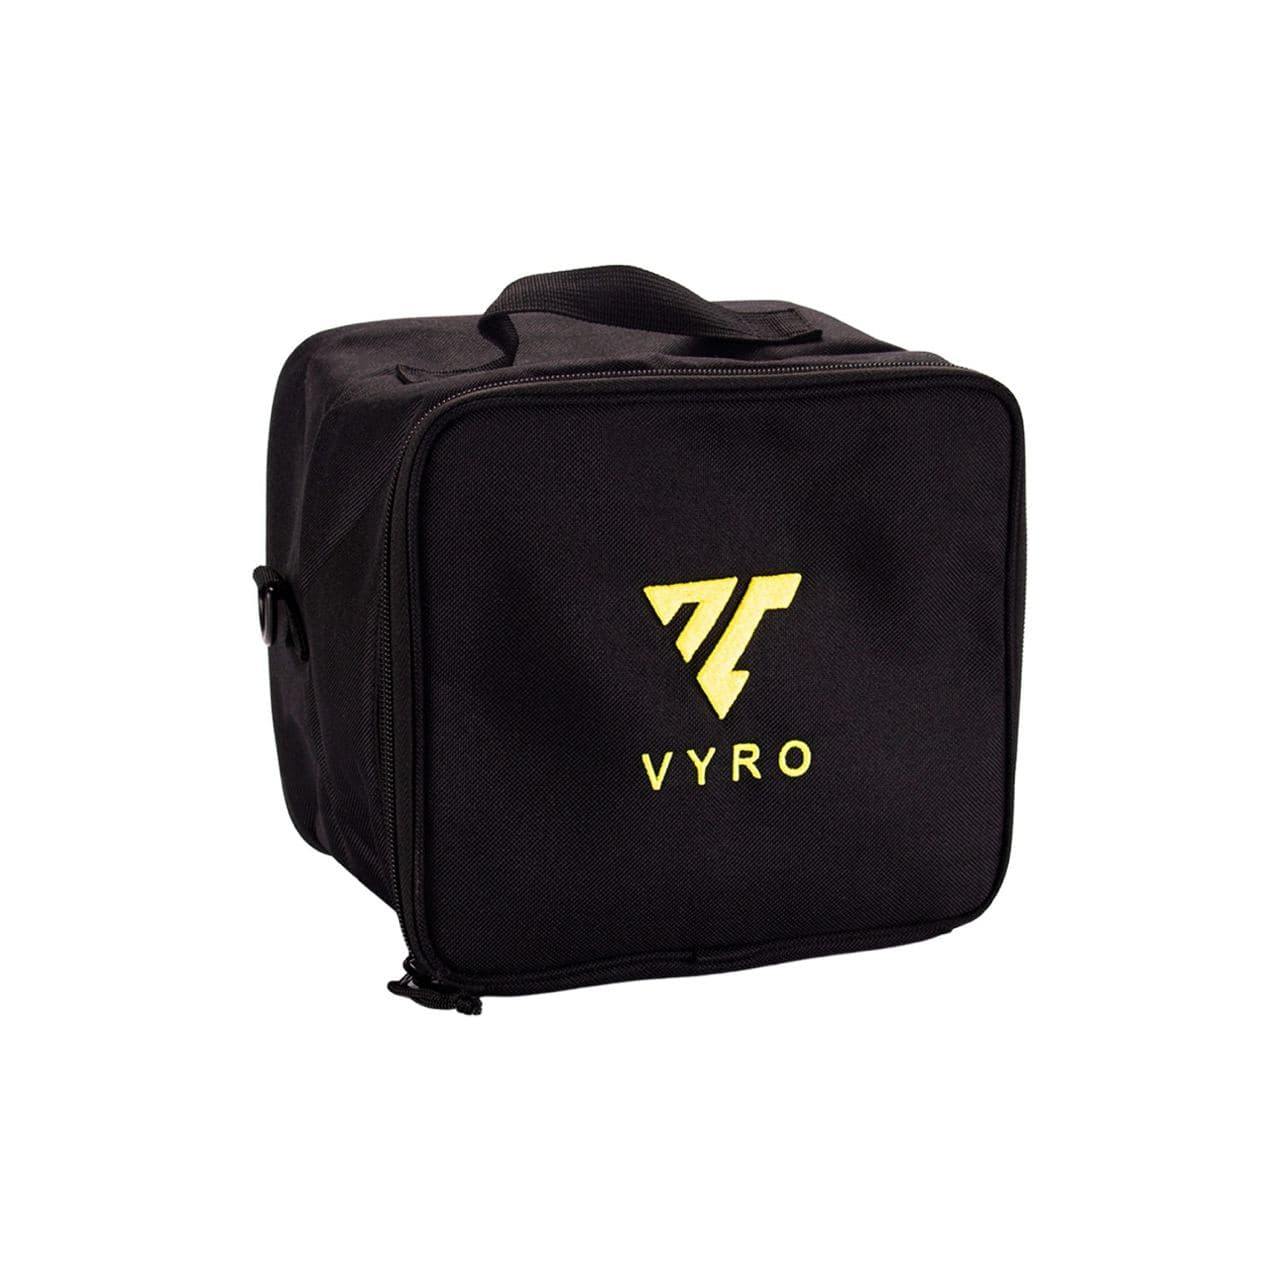 Aeon Vyro One Travel Bag - shishagear - UK